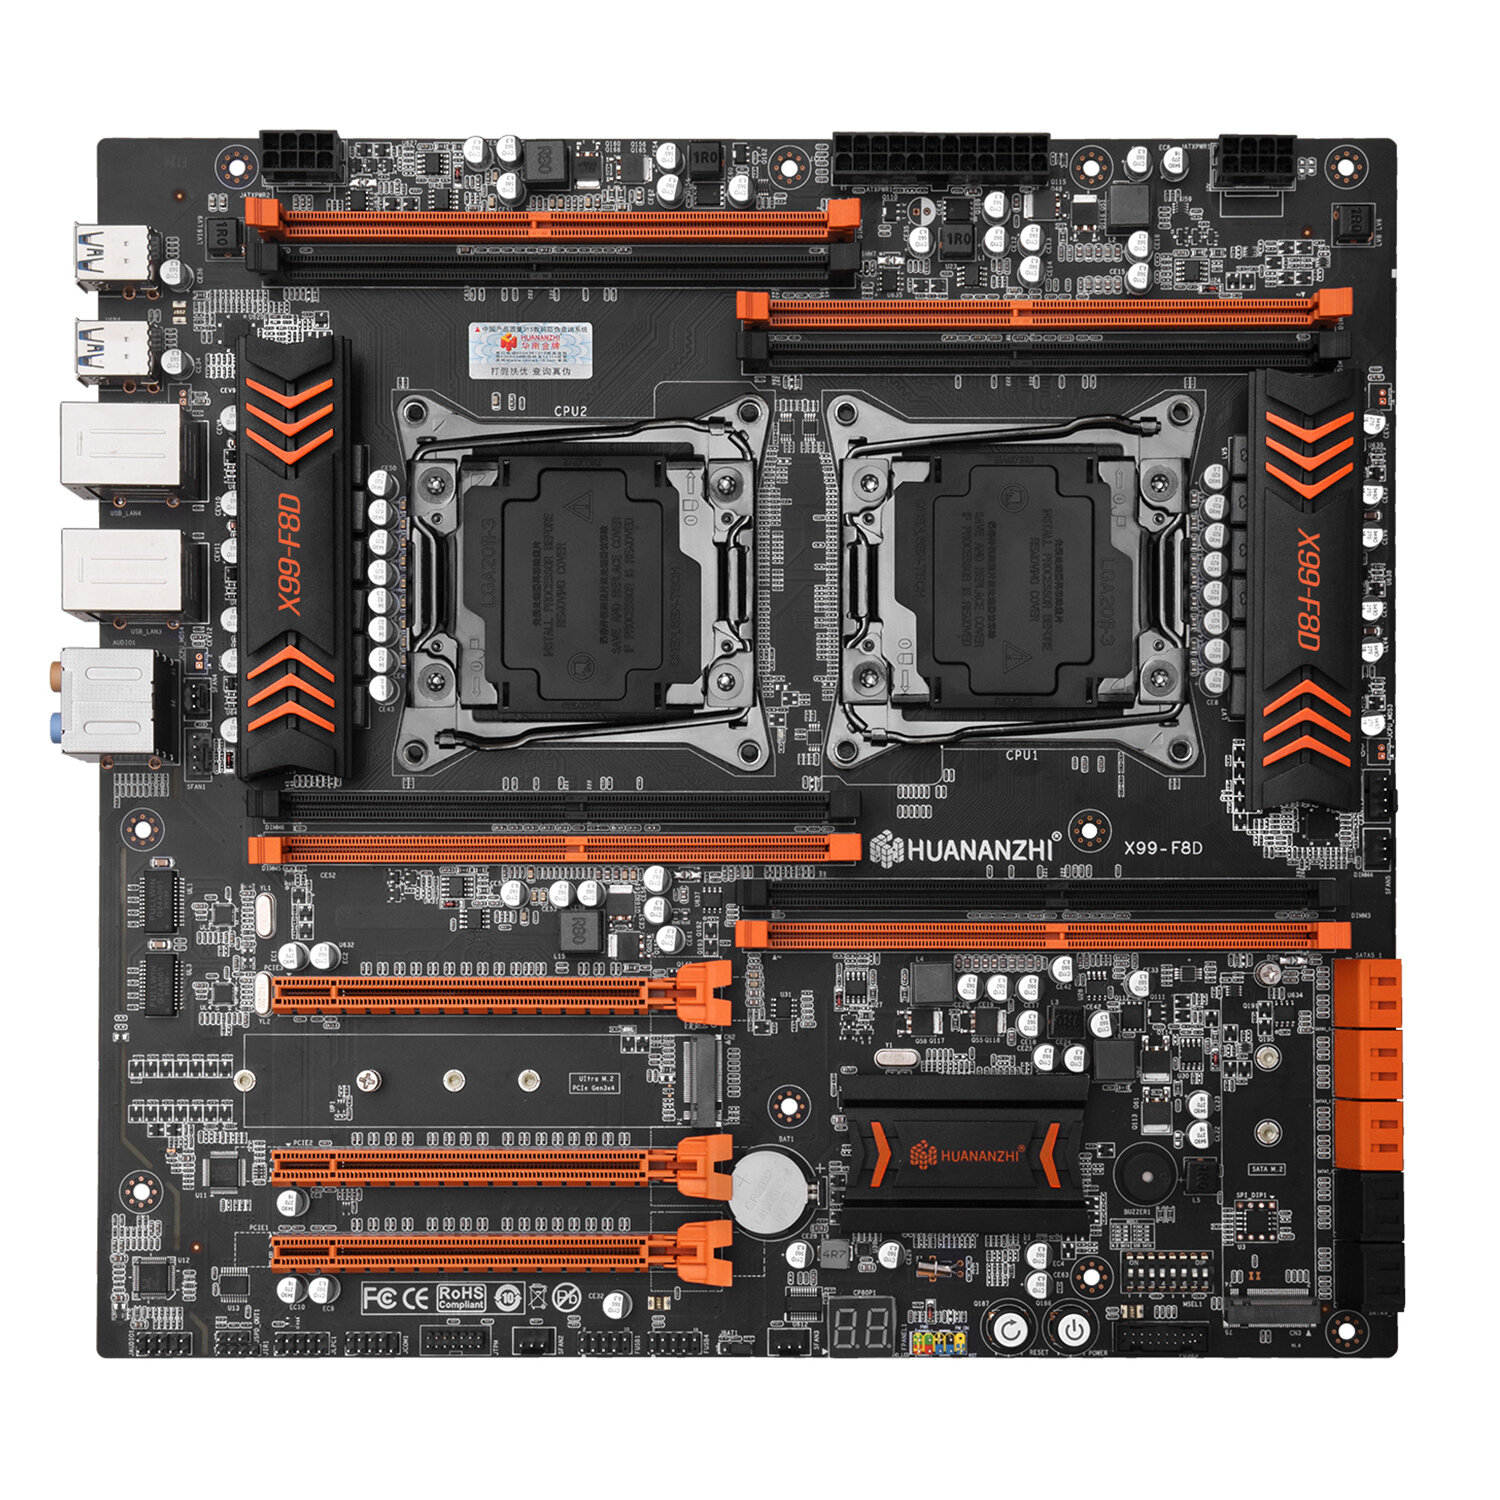 Huananzhi X99dual F8d Motherboard Intel Dual Cpu X99 Lga 2011 3 E5 V3 Ddr4 Recc 256gb M 2 Nvme